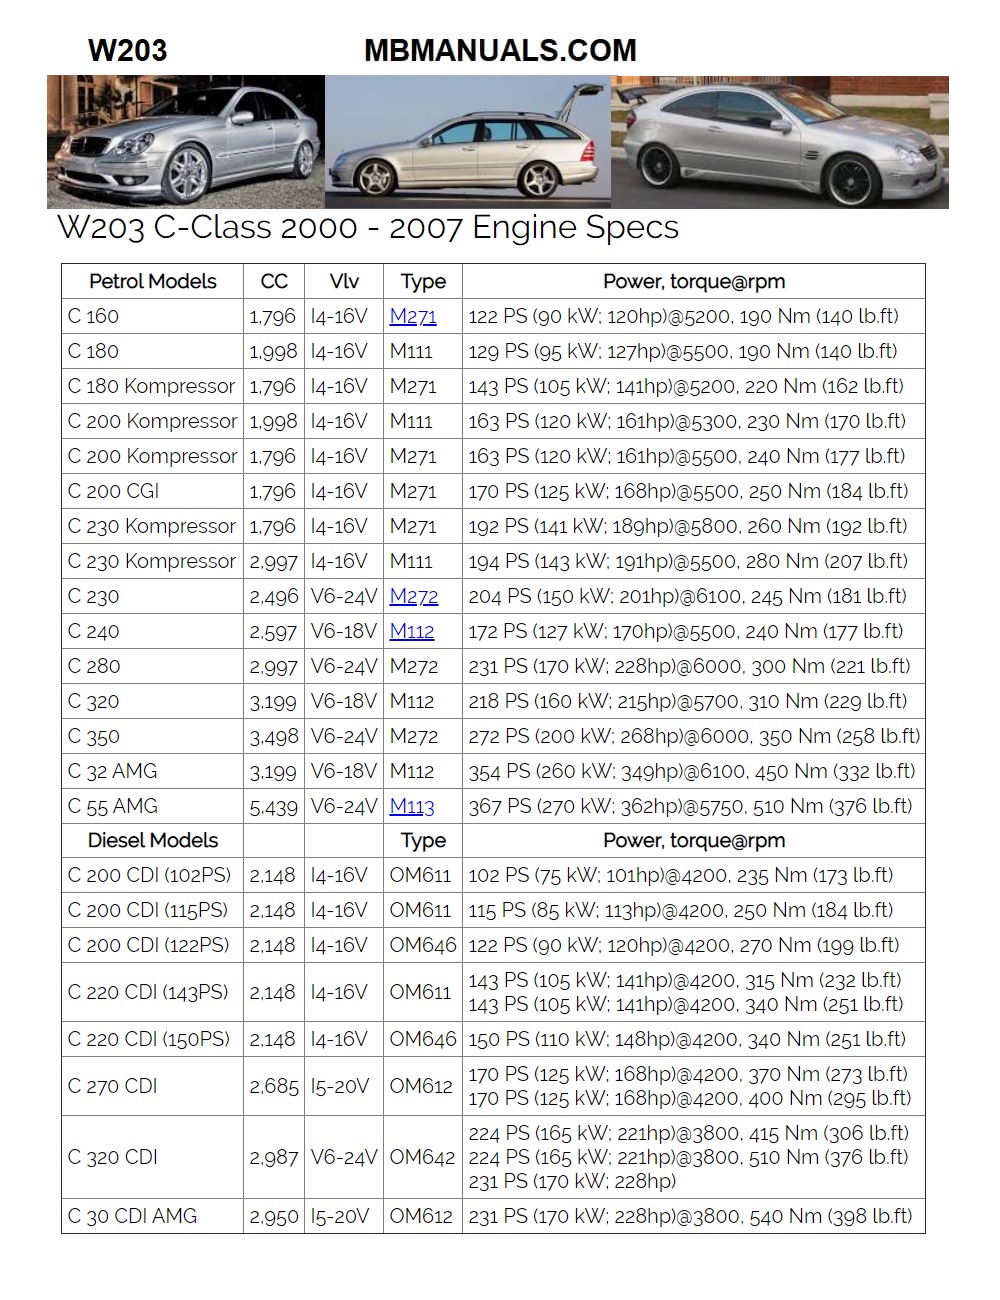 Mercedes w203 workshop manual pdf free download download windows dark theme